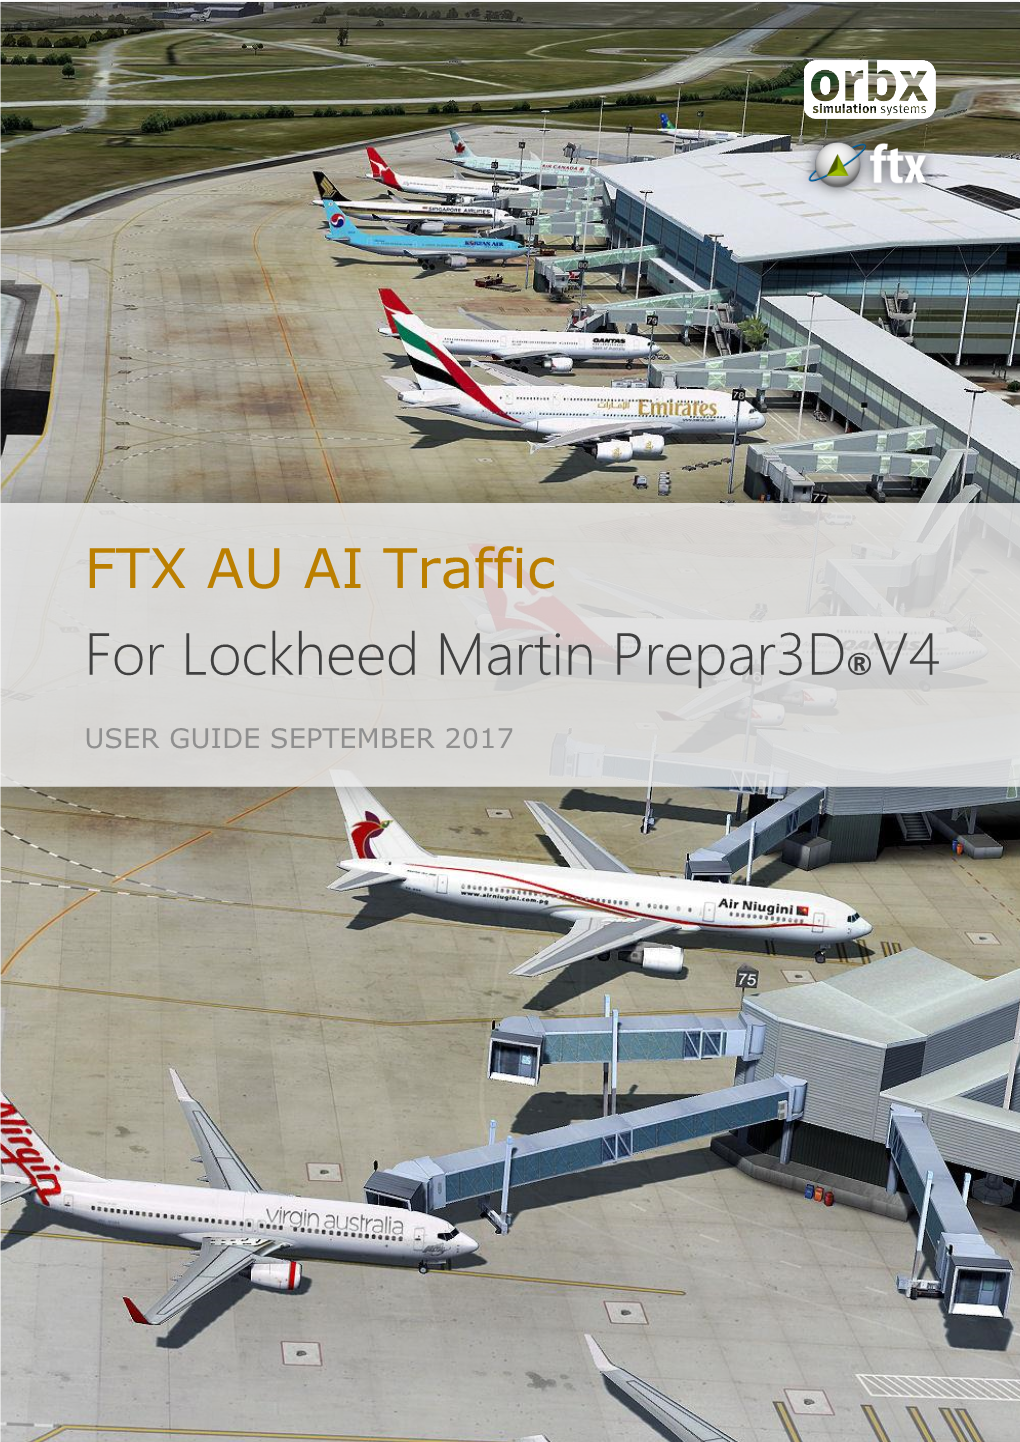 FTX AU AI Traffic for Lockheed Martin Prepar3d®V4